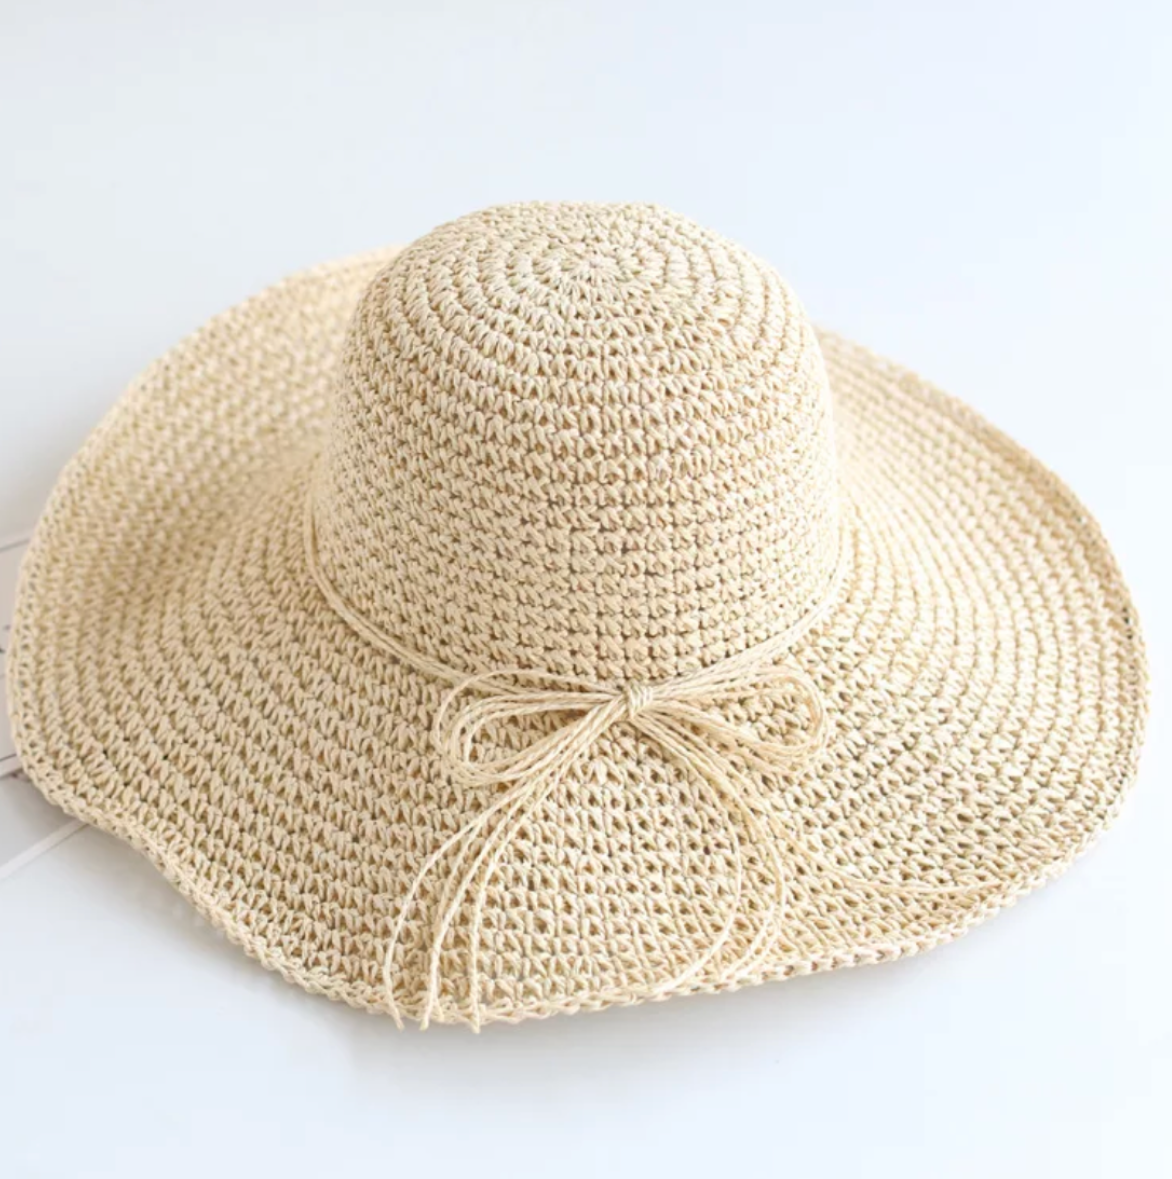 Handmade Sun Hats